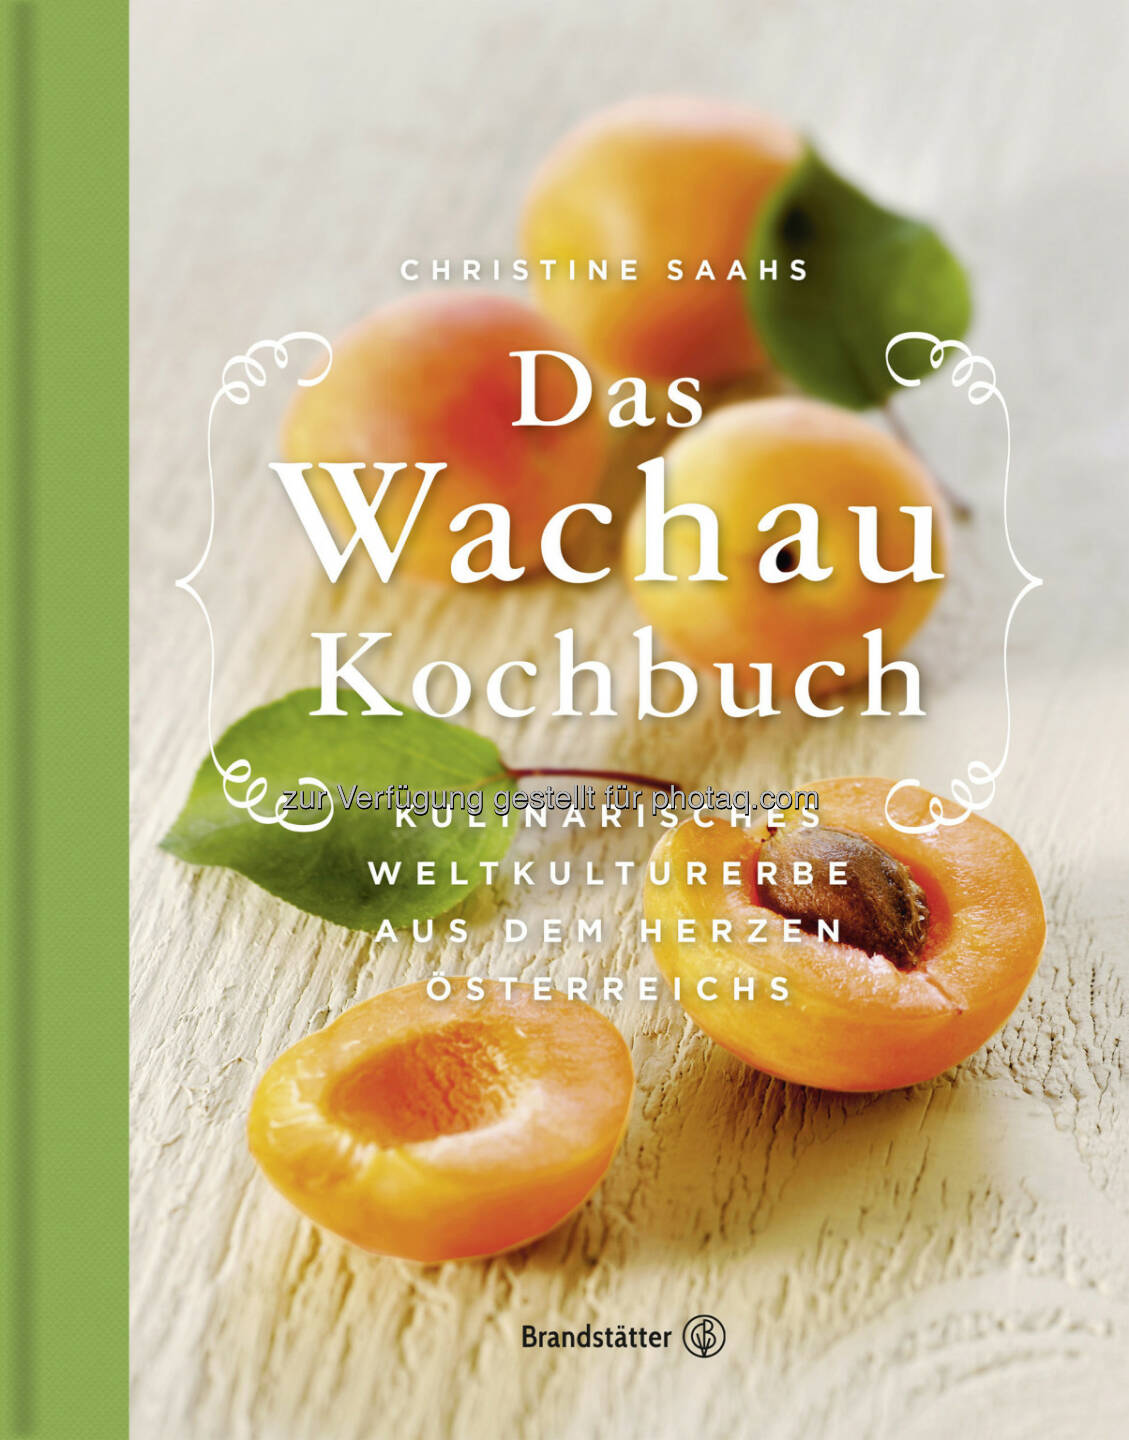 Nikolaihof Wachau: Nikolaihof veröffentlicht Wachau-Kochbuch